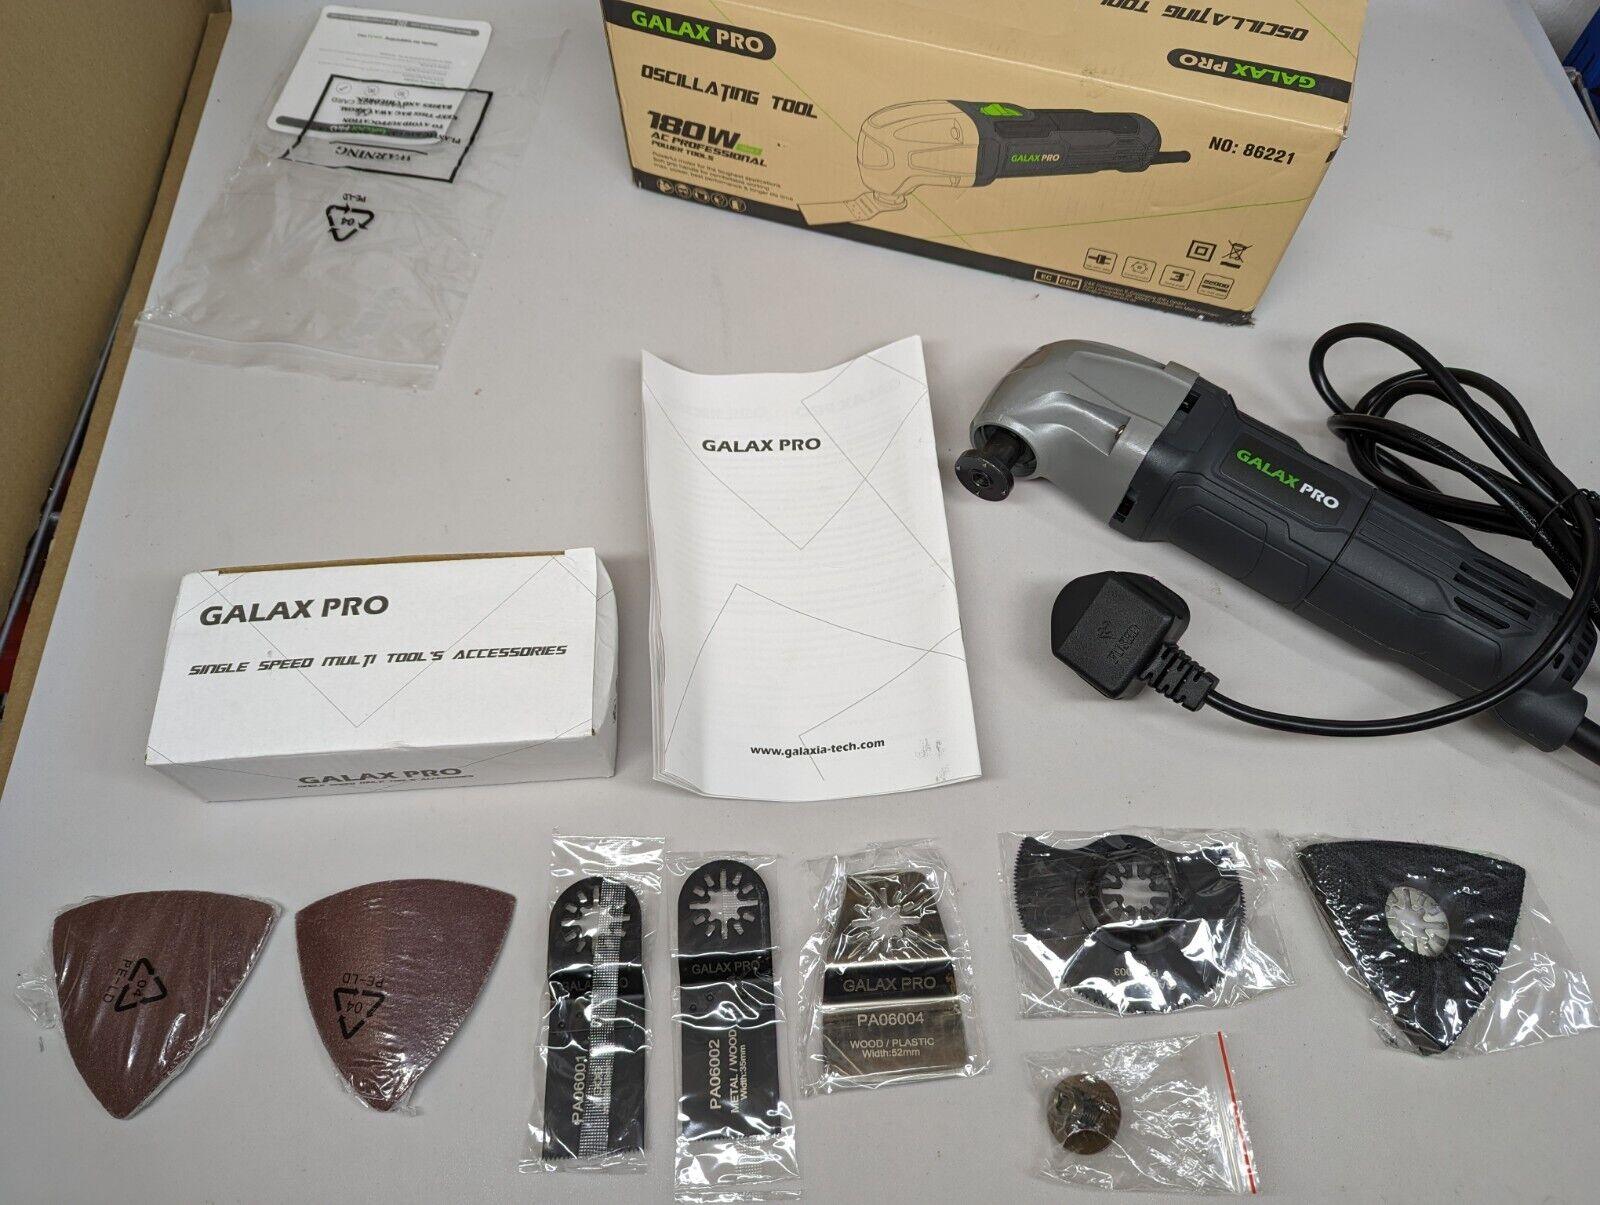 GALAX PRO 180W Oscillating 22000 RPM Multi Tool with 3 Saw Blades - Massive Discounts